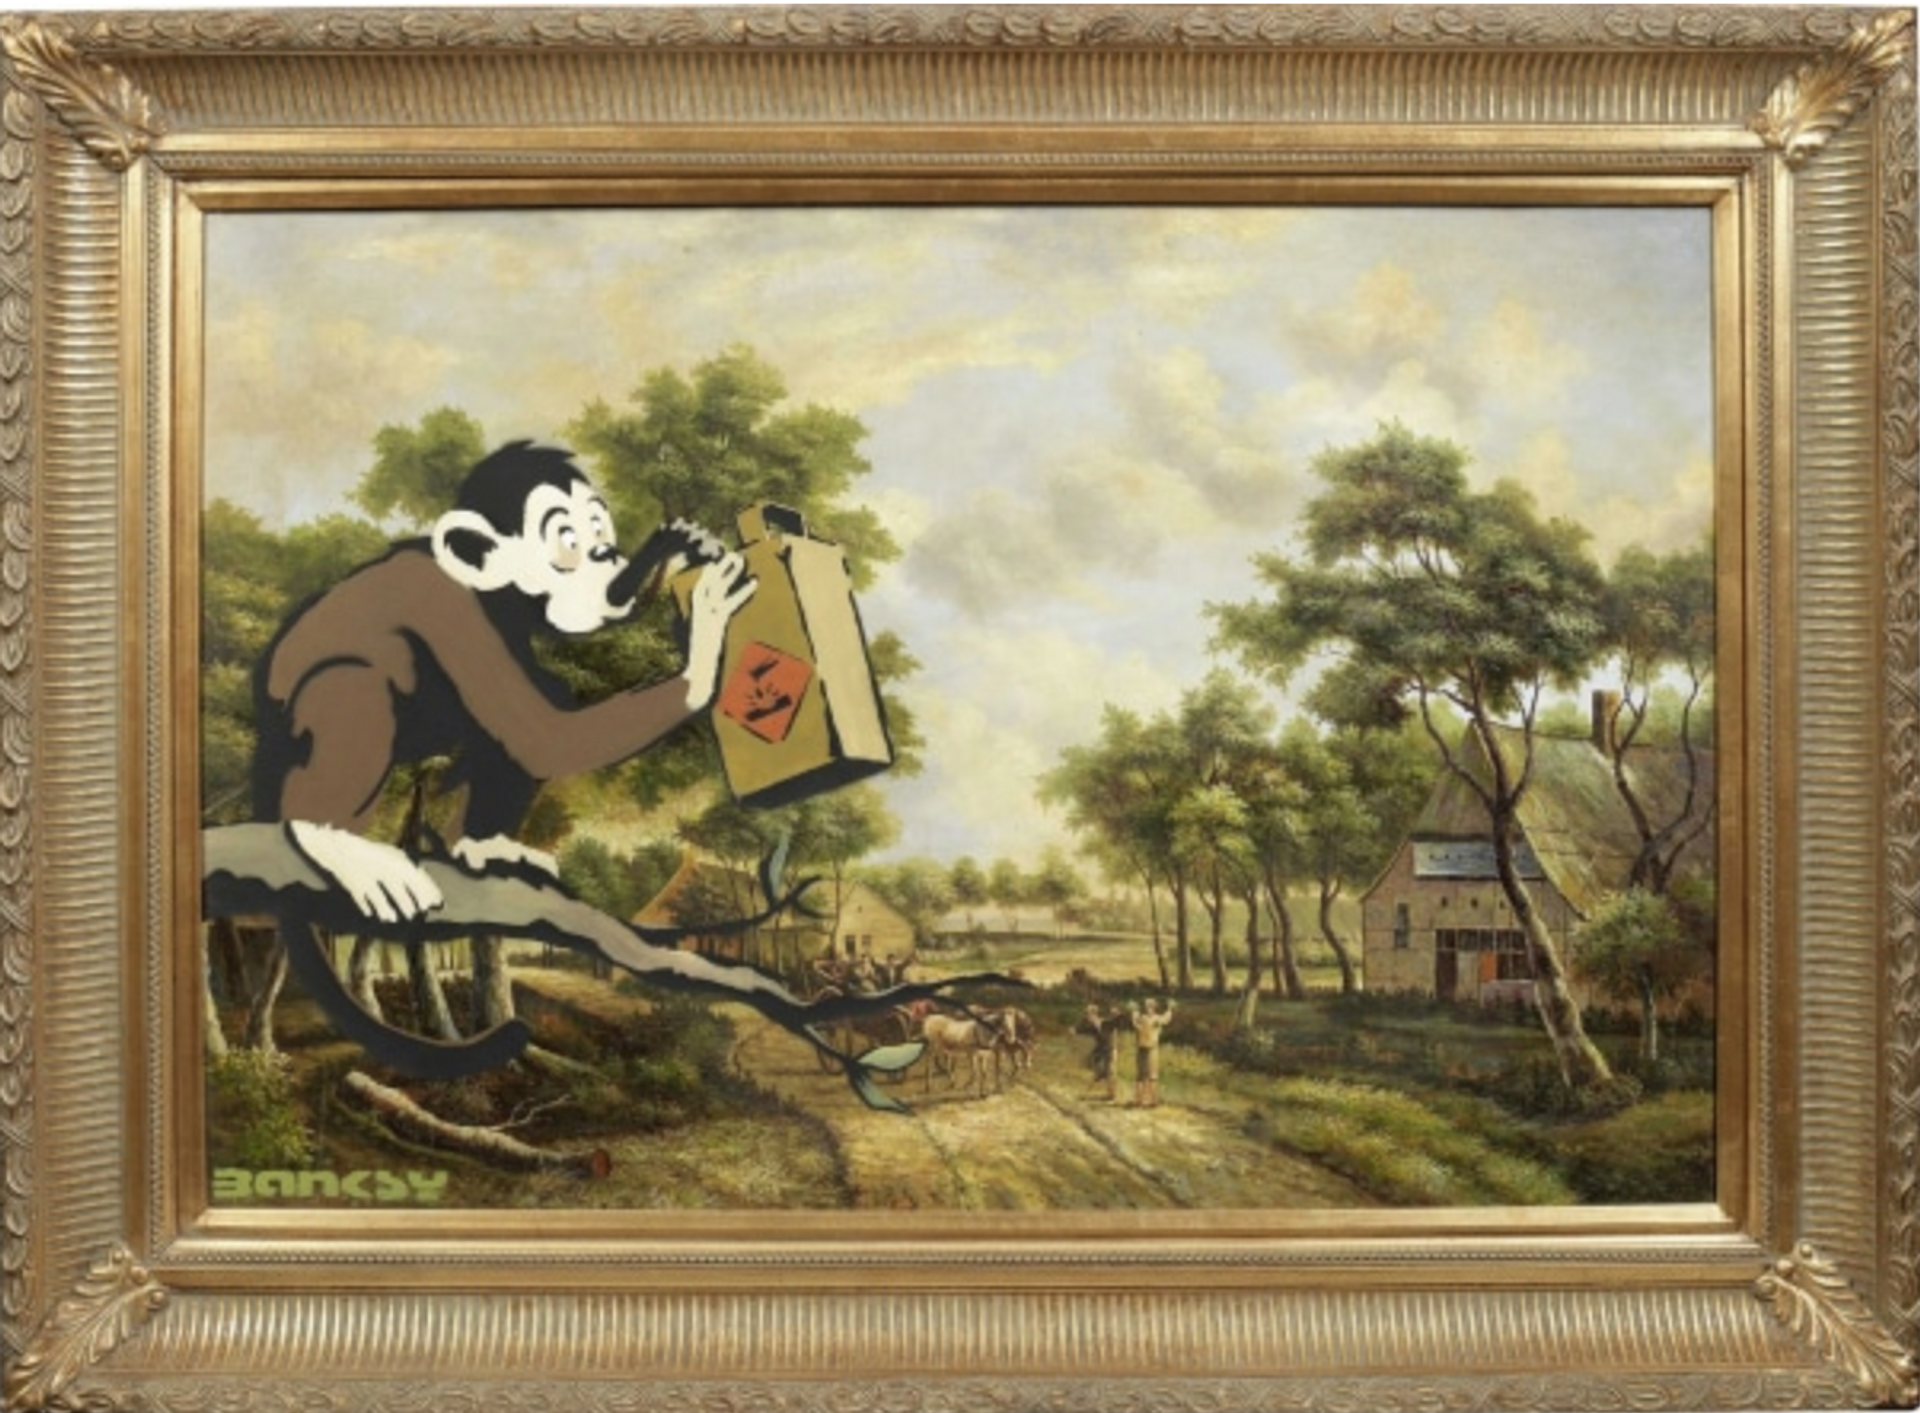 Monkey Poison by Banksy